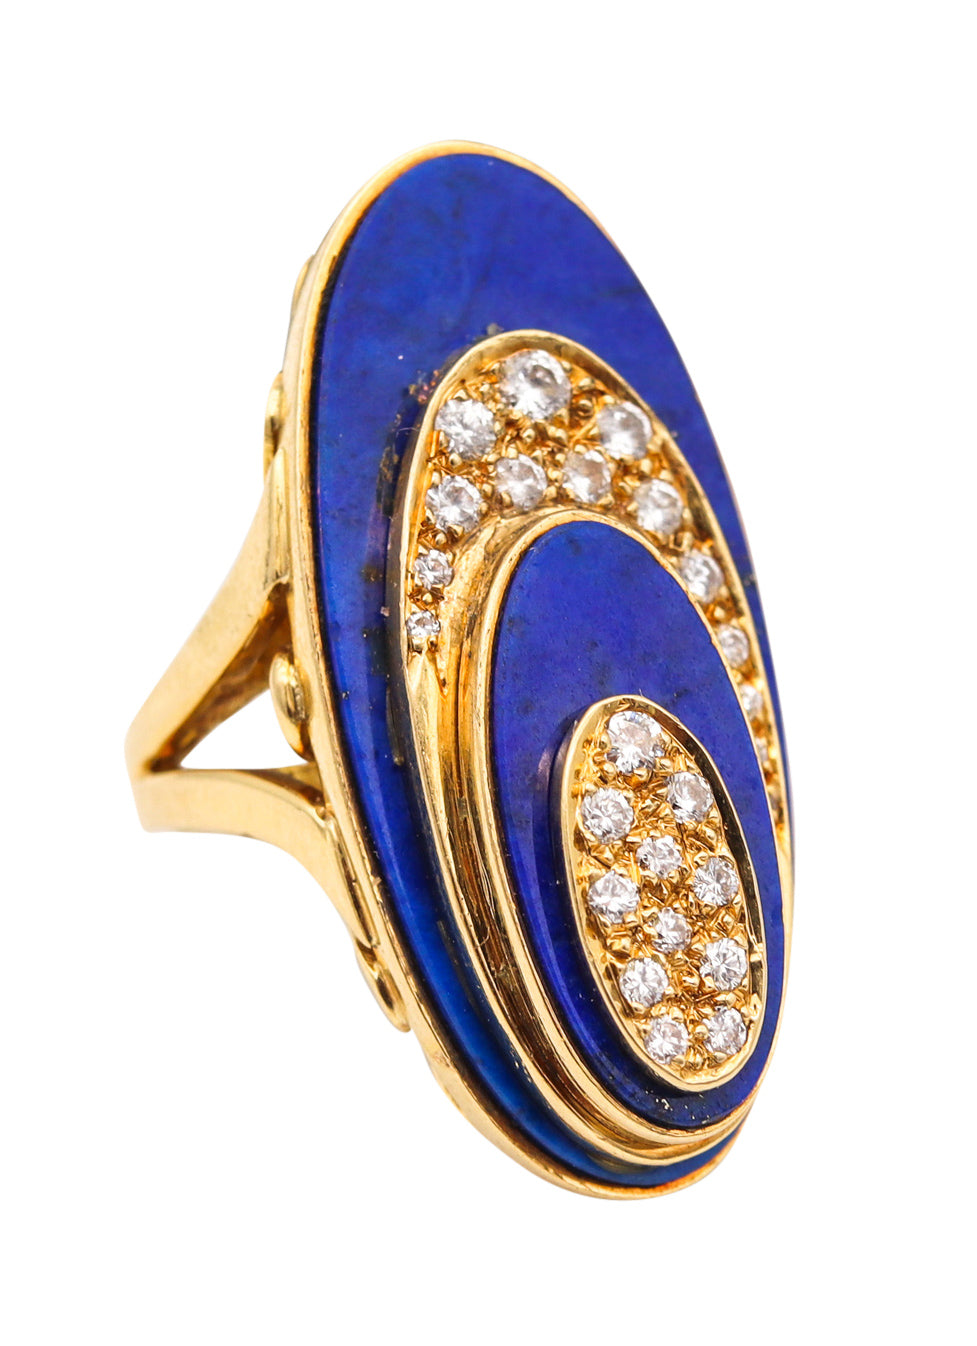 Modernist 1970 Italian Geometric Cocktail Ring In 18Kt Gold With VS Diamonds & Lapis Lazuli